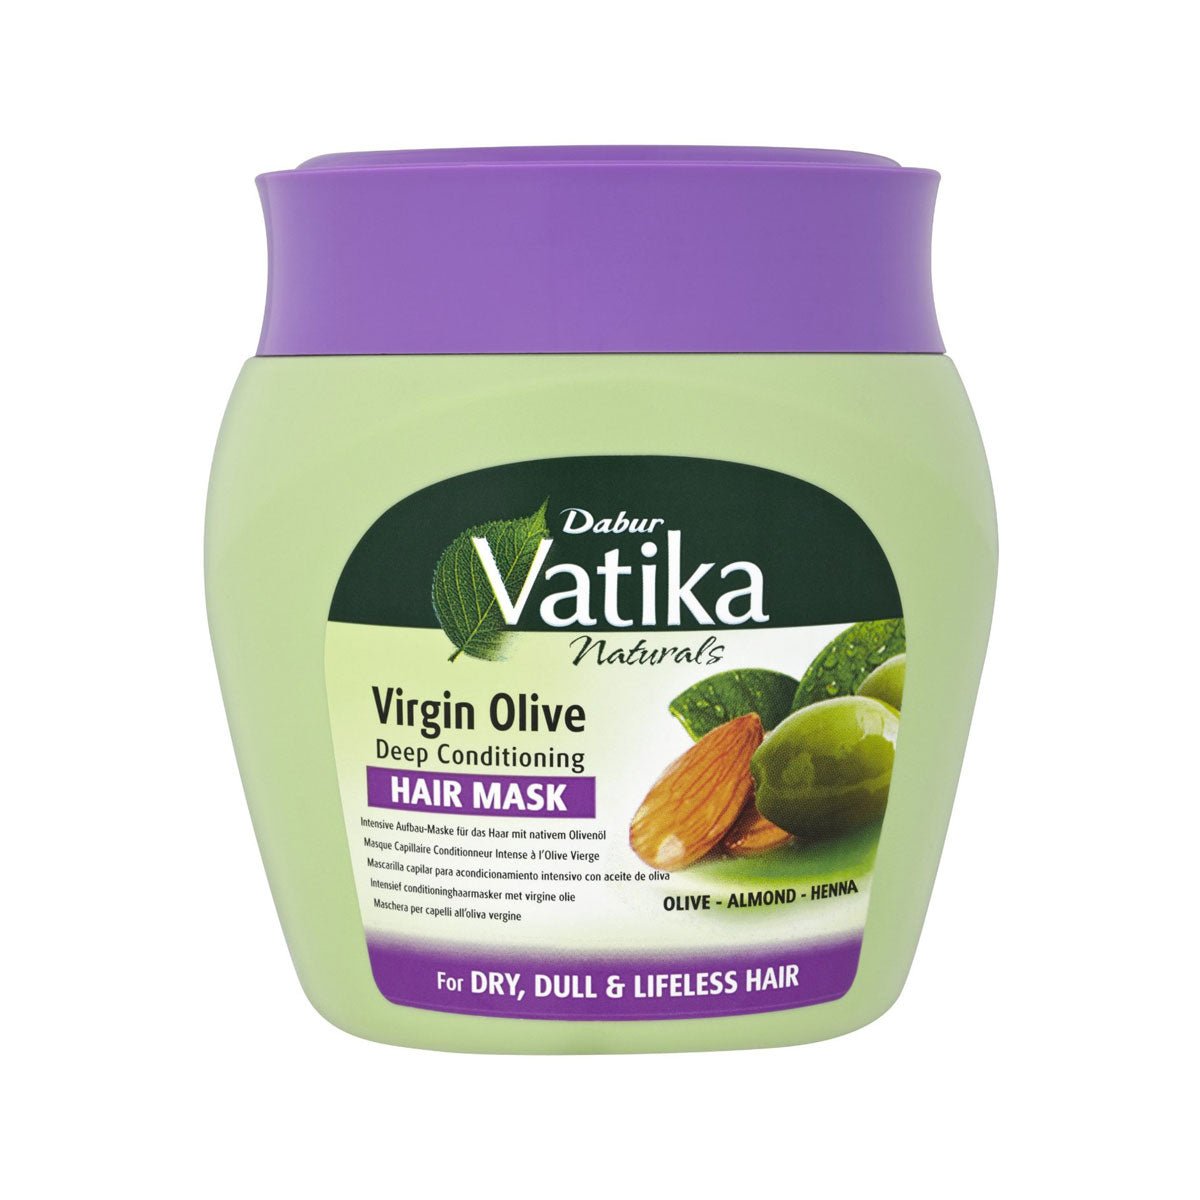 Dabur Vatika Virgin Olive Deep Conditioning Hair Mask 500g